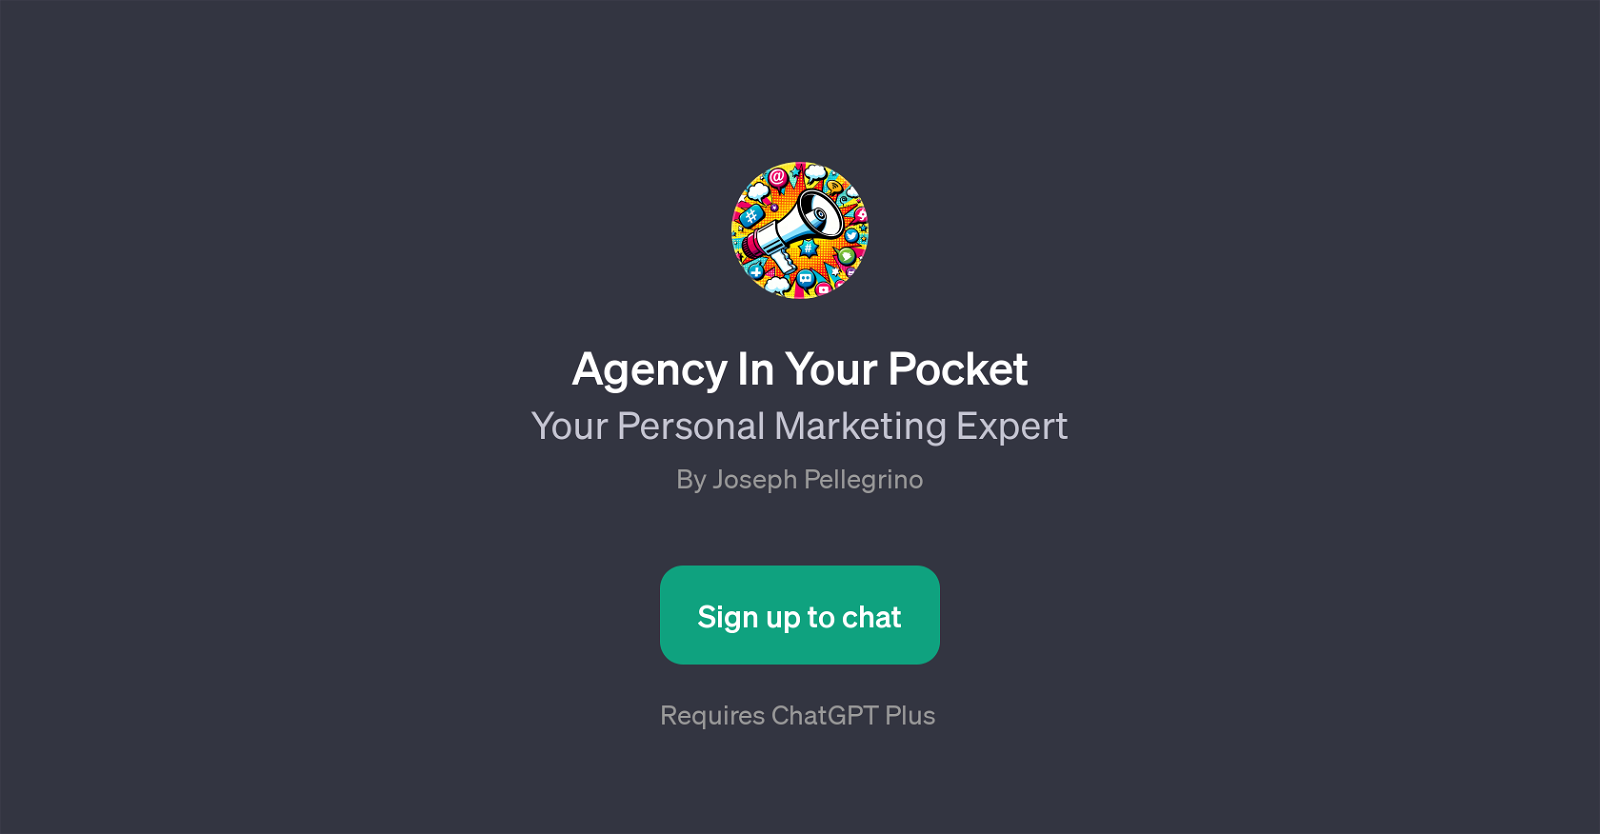 Agency In Your Pocket website